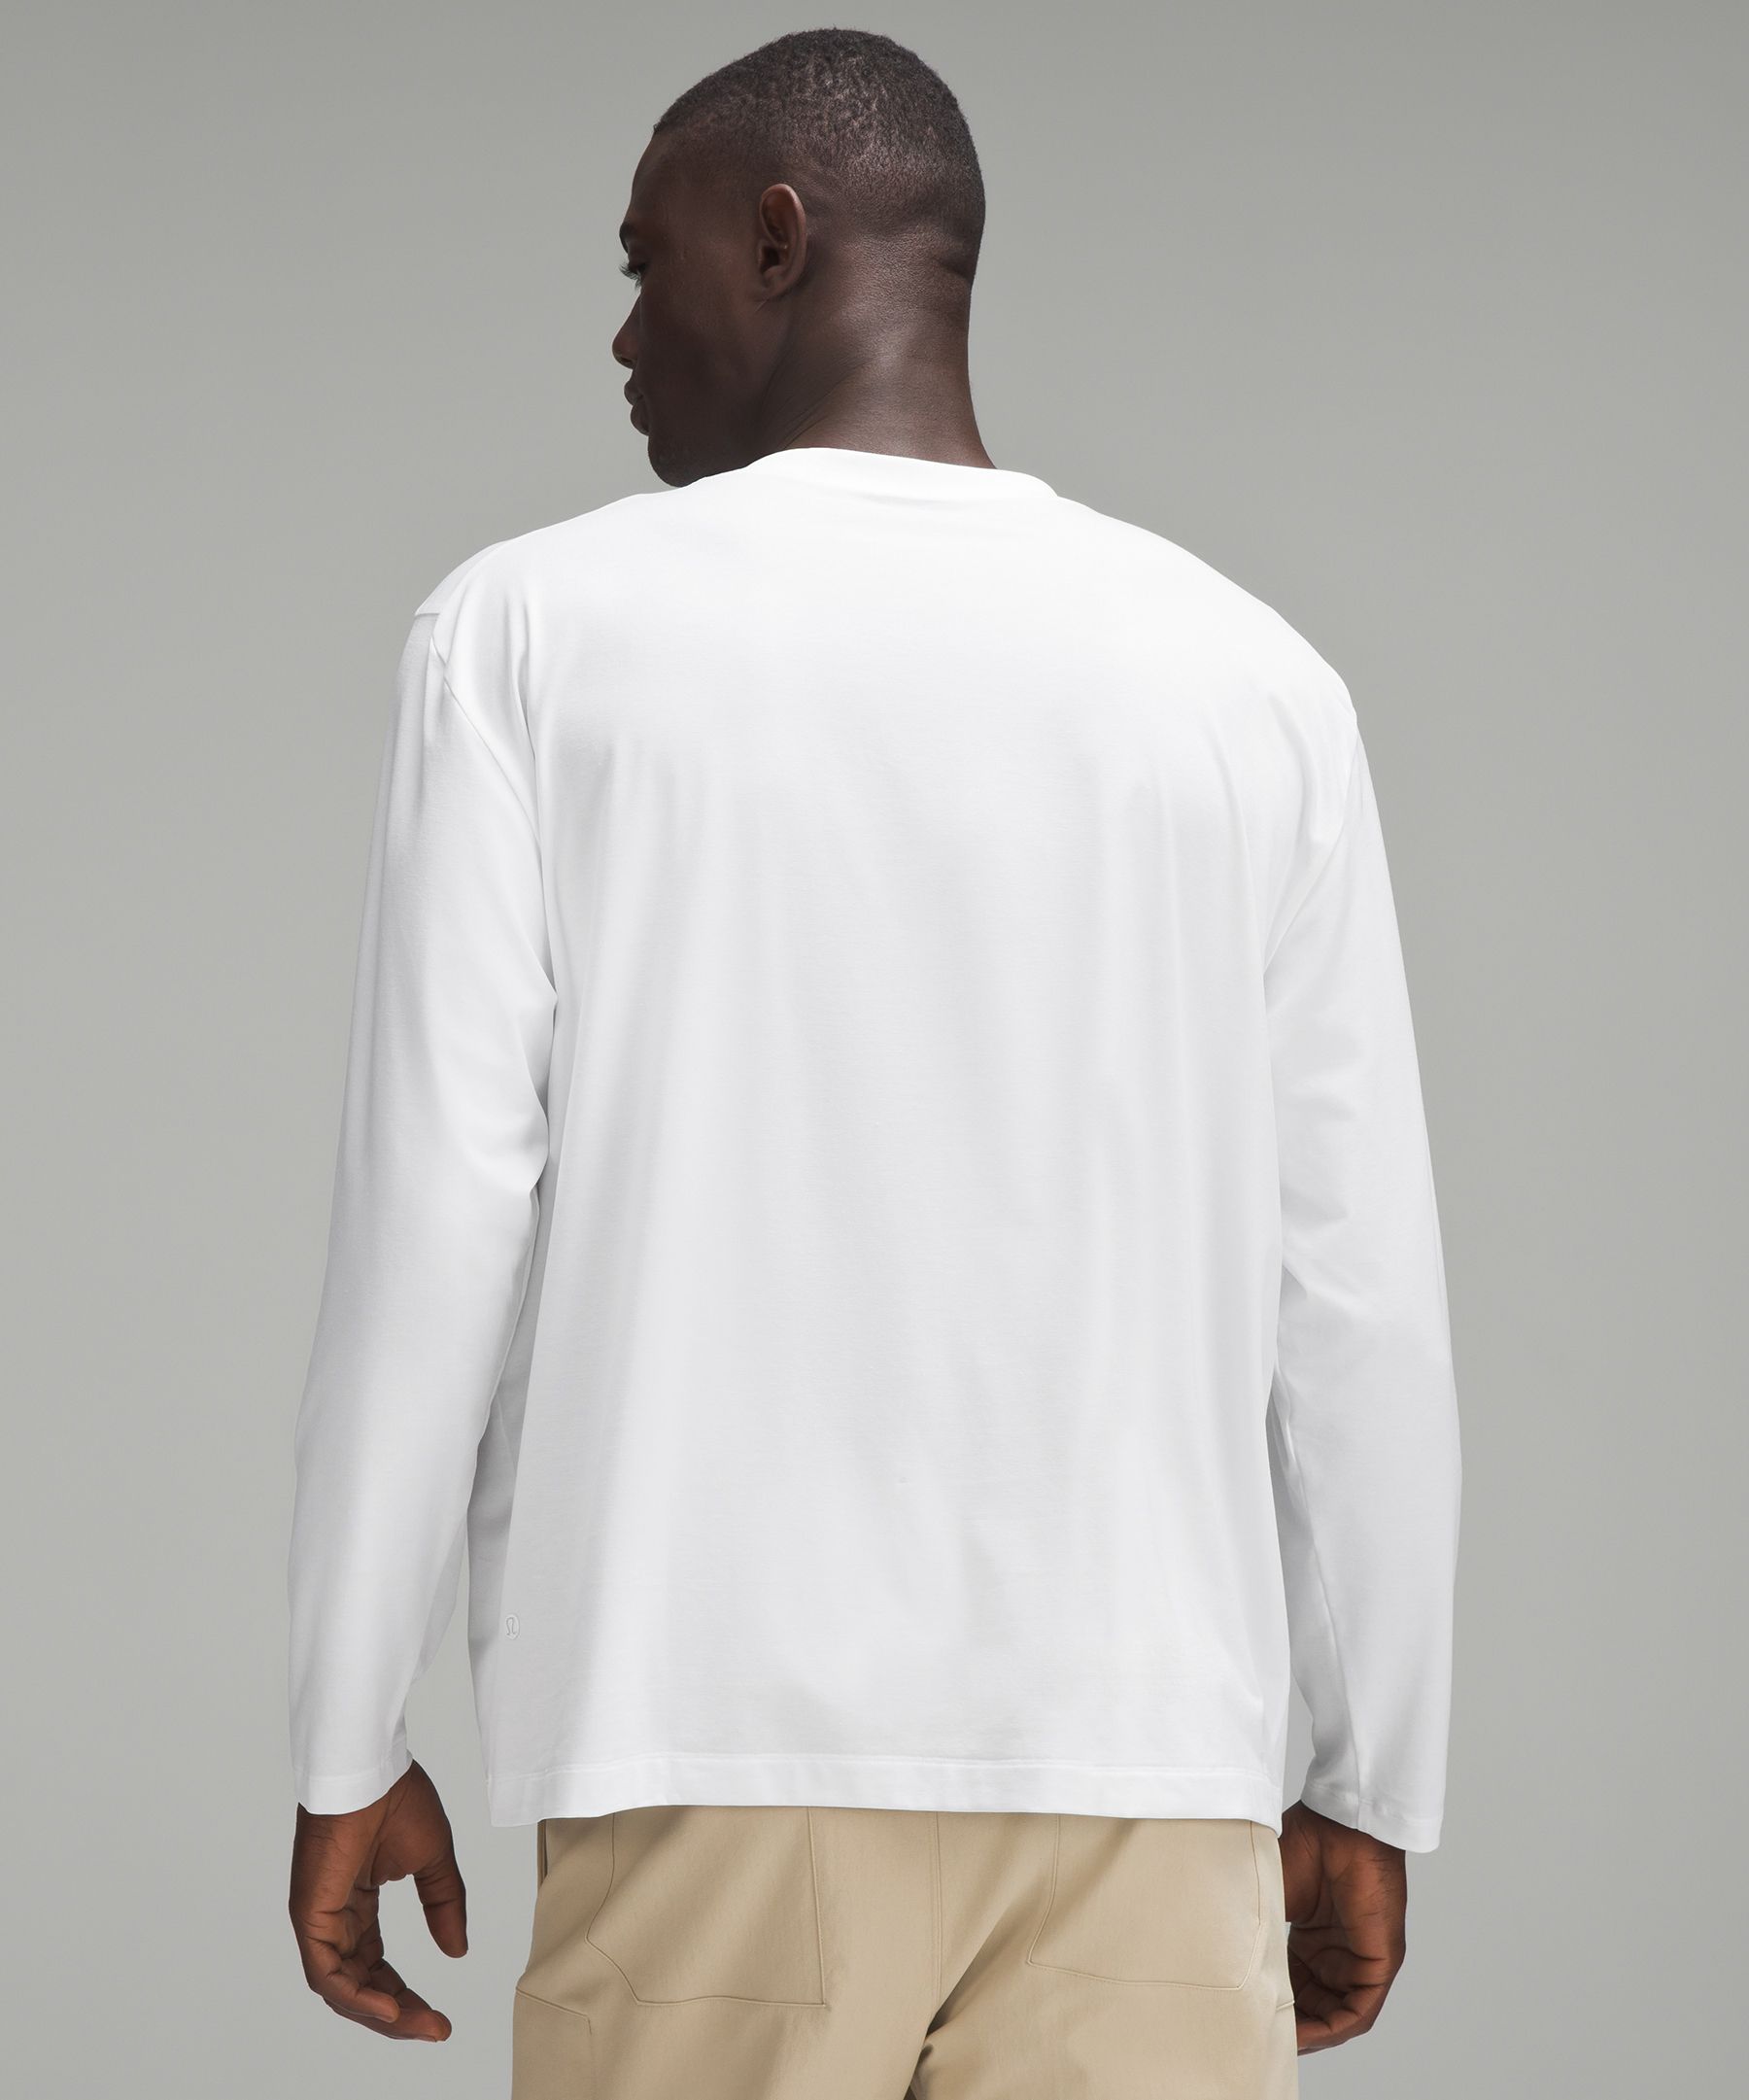 Lululemon Athletica Color Block Gray Active T-Shirt Size 8 - 54% off